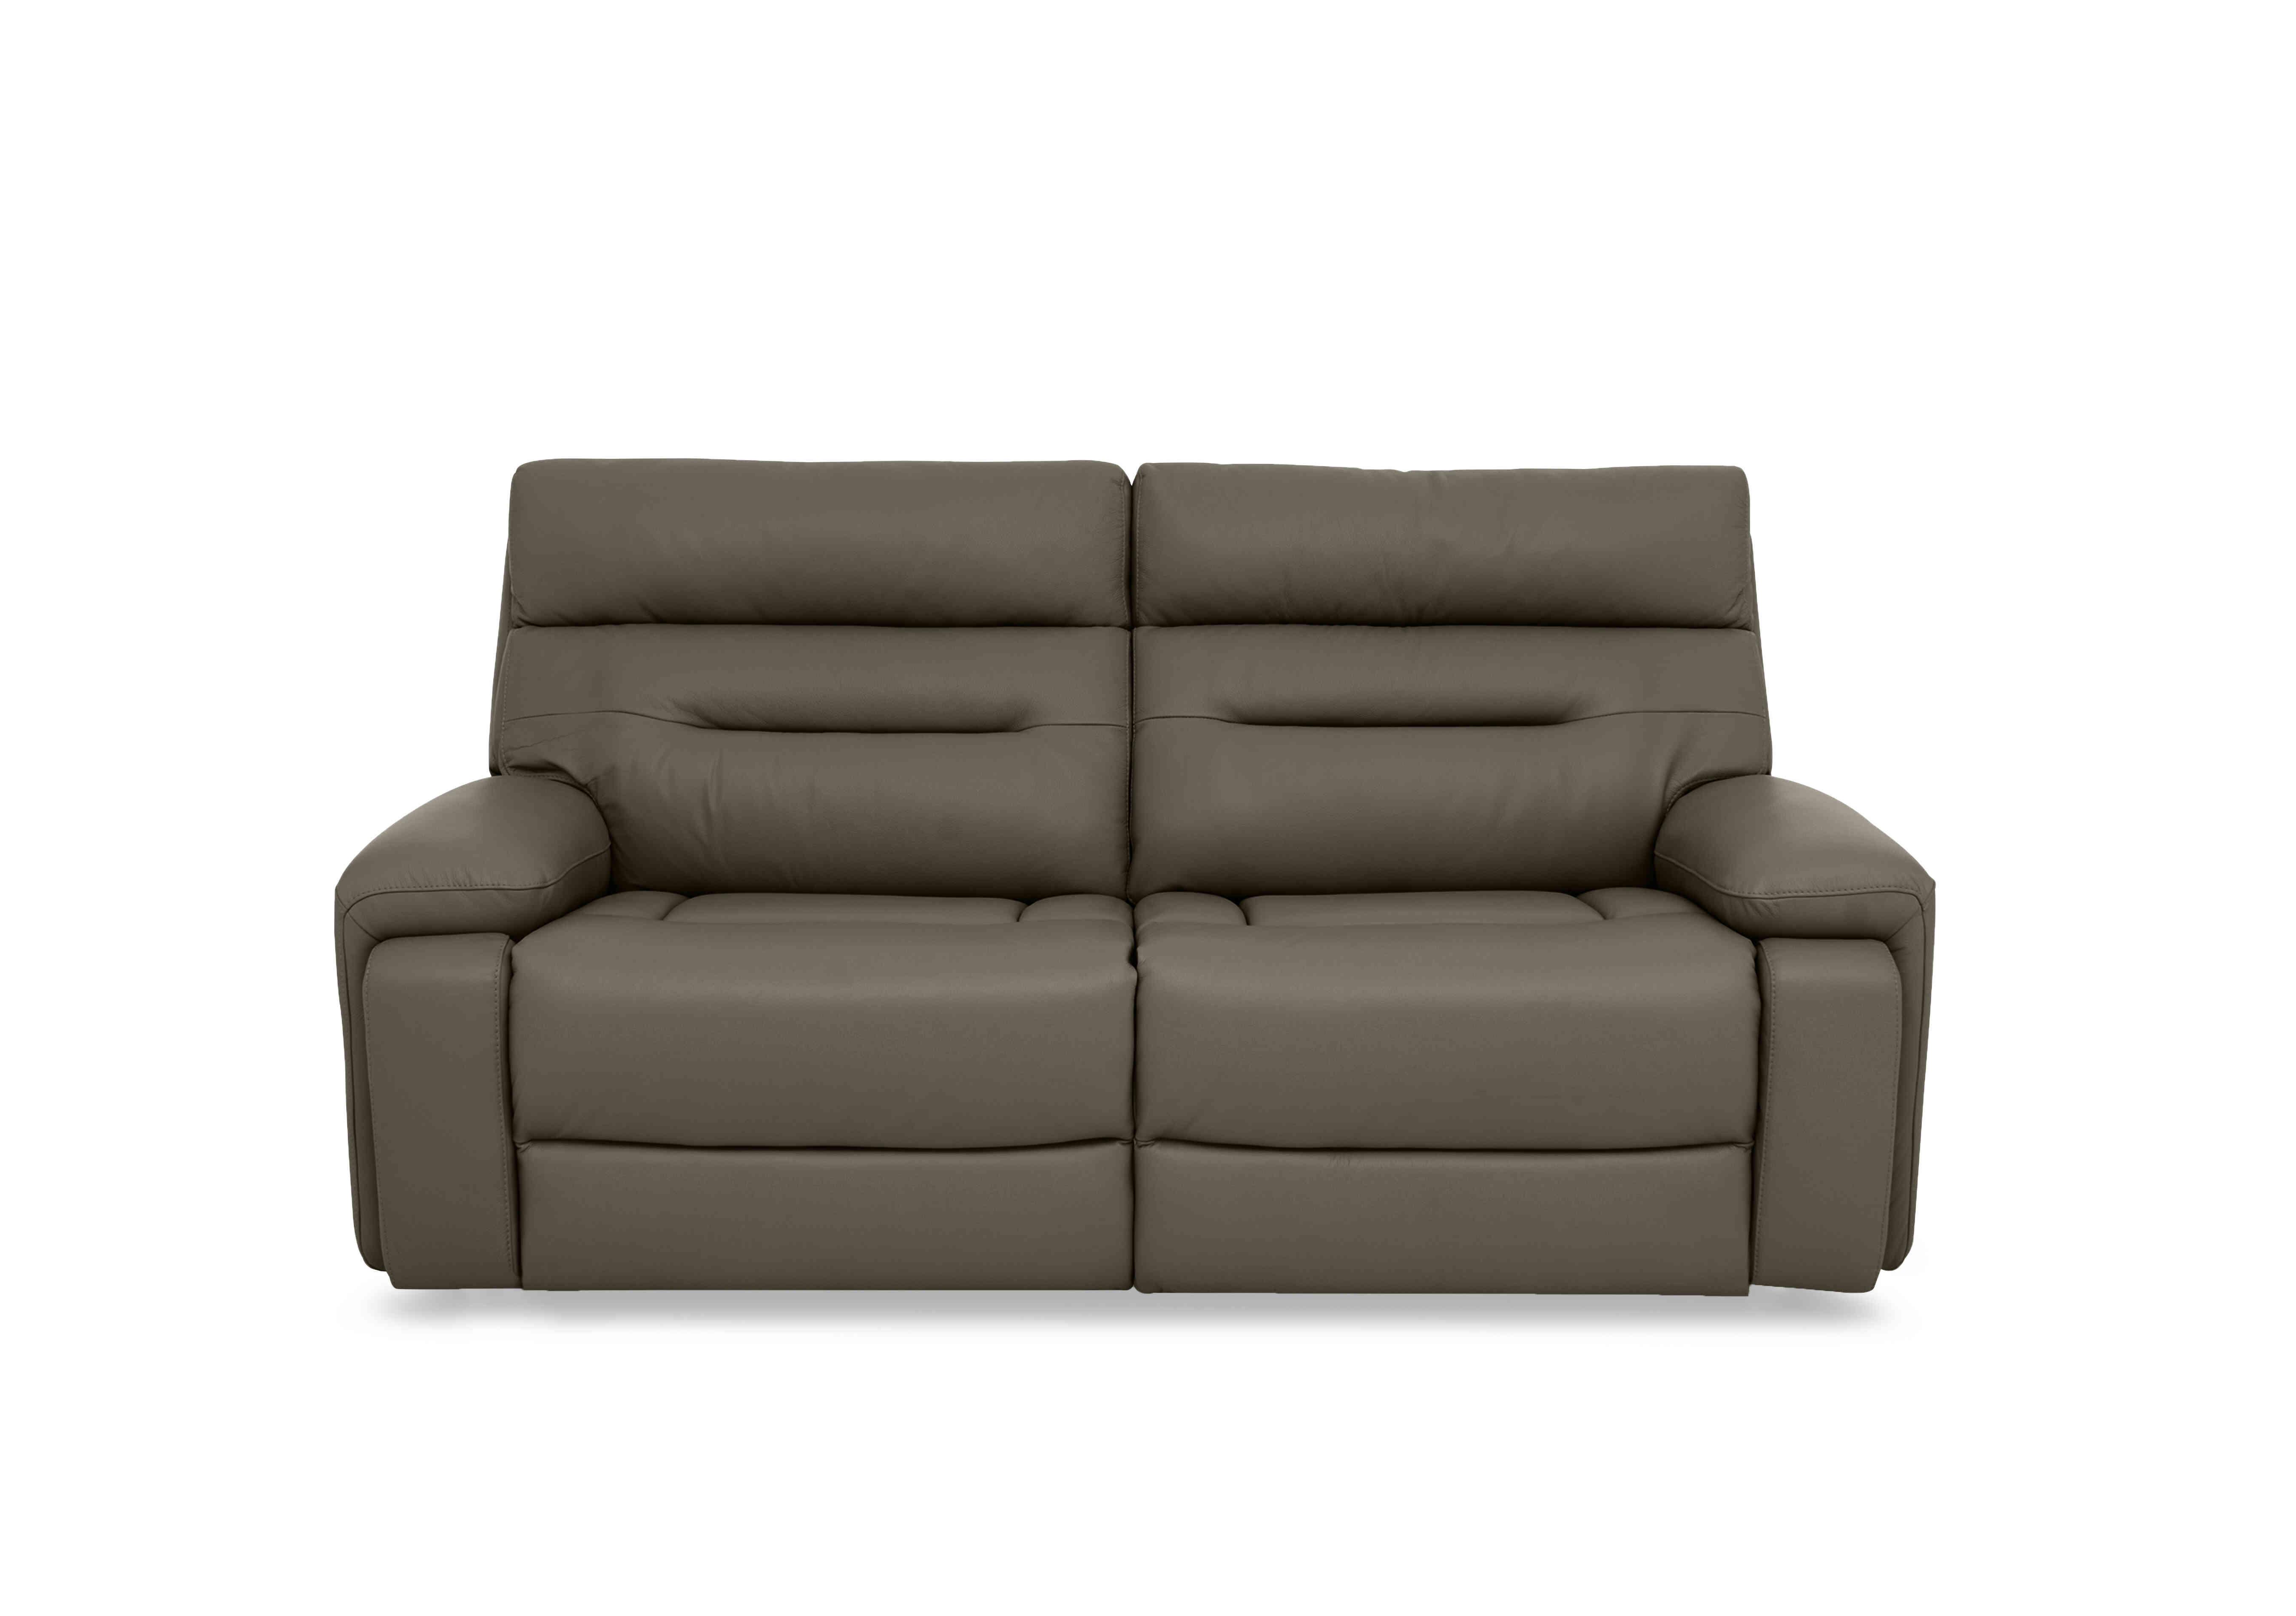 Cinemax 3 Seater Leather Sofa in La-4829 Natural Olive on Furniture Village